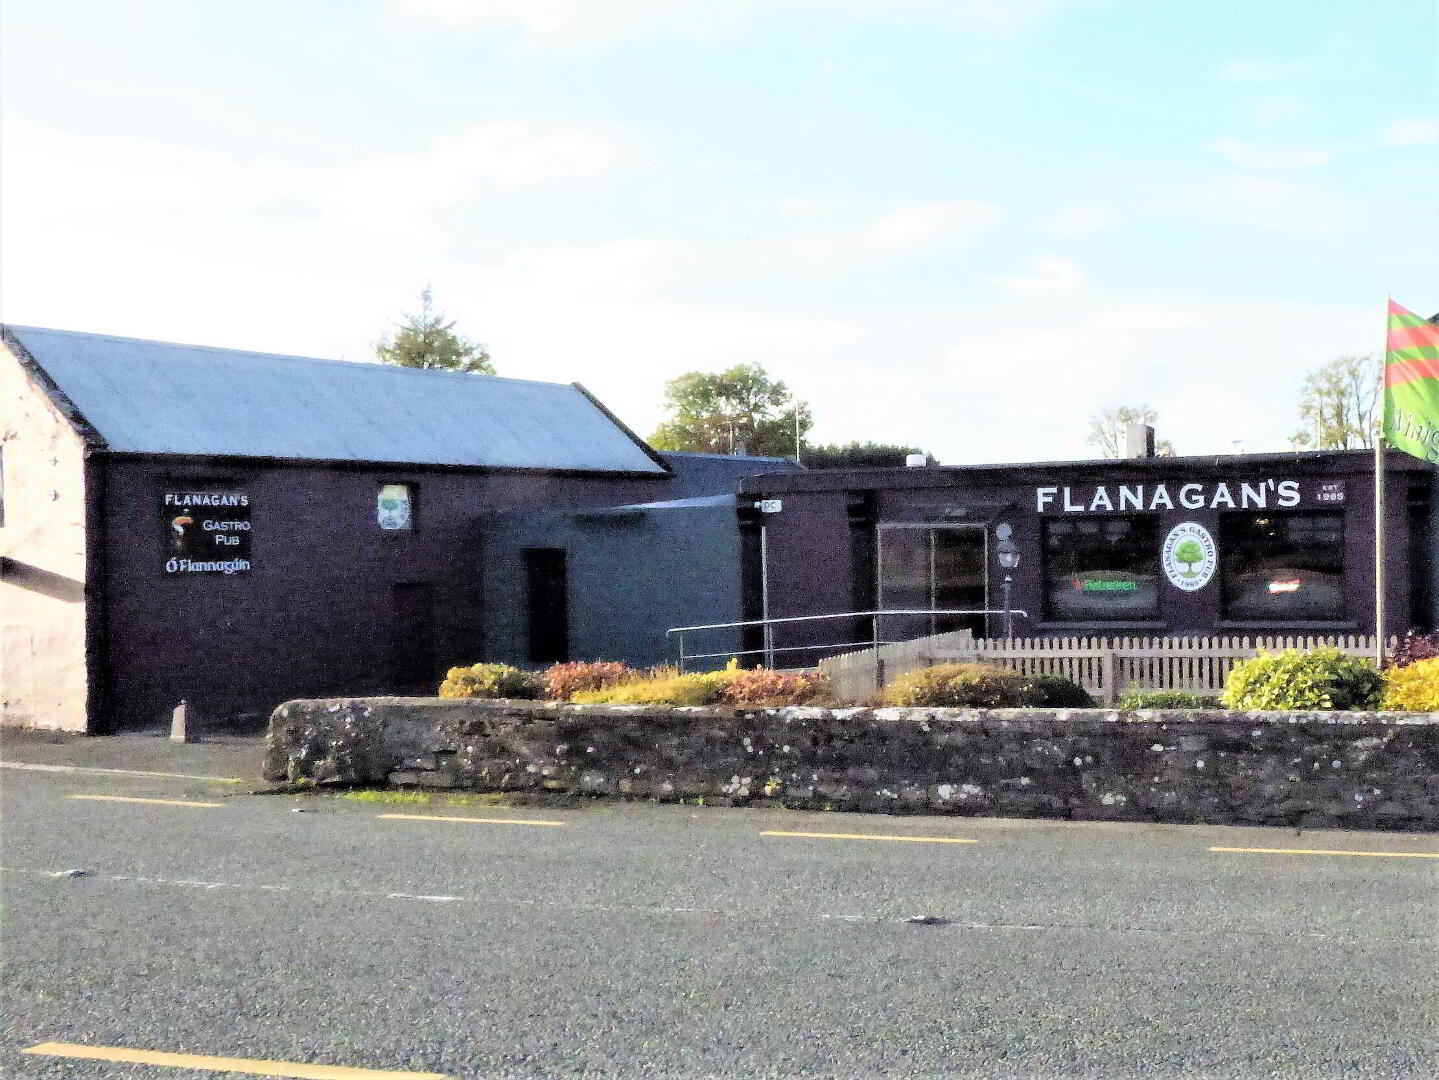 Flanagans Gastro Pub